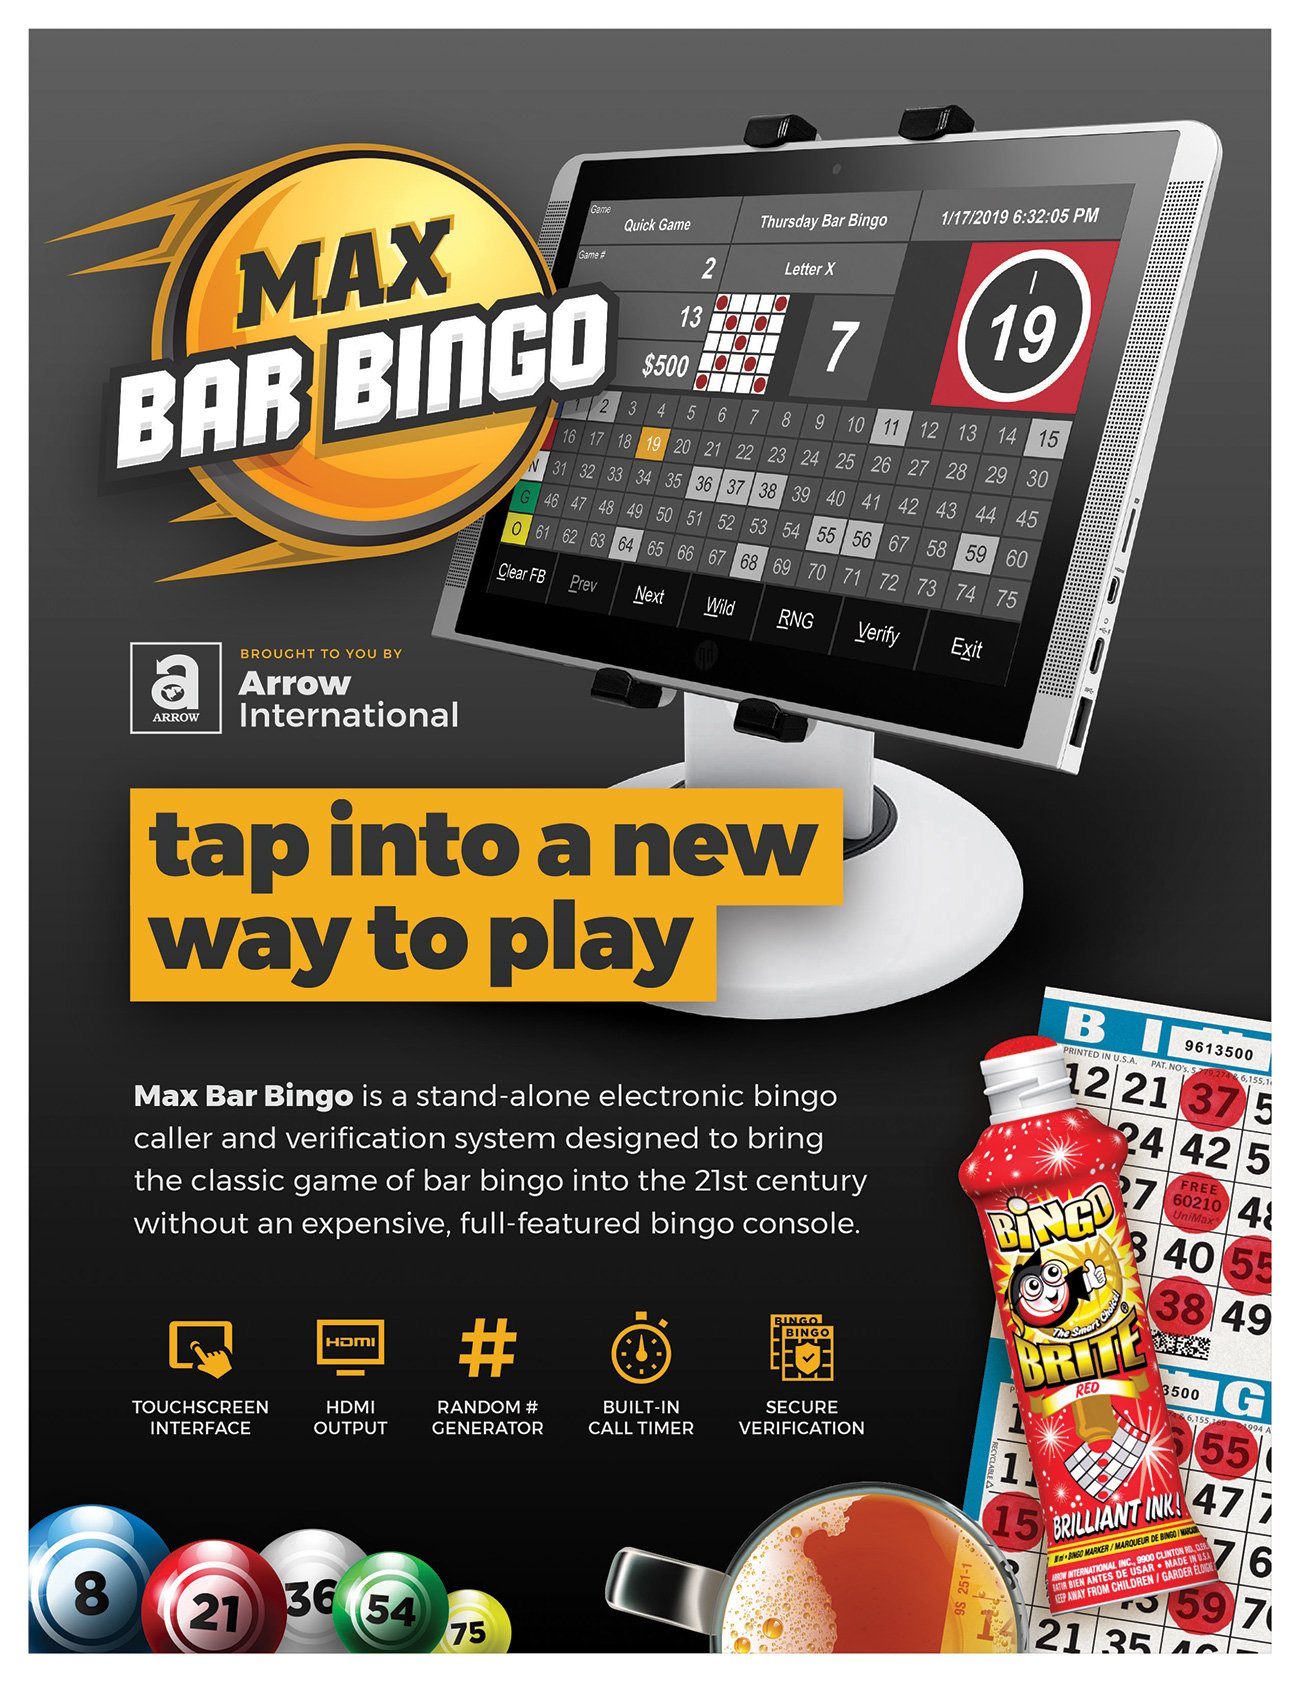 Max Bar Bingo Promotional Materials/Equipment Flyers & Brochures